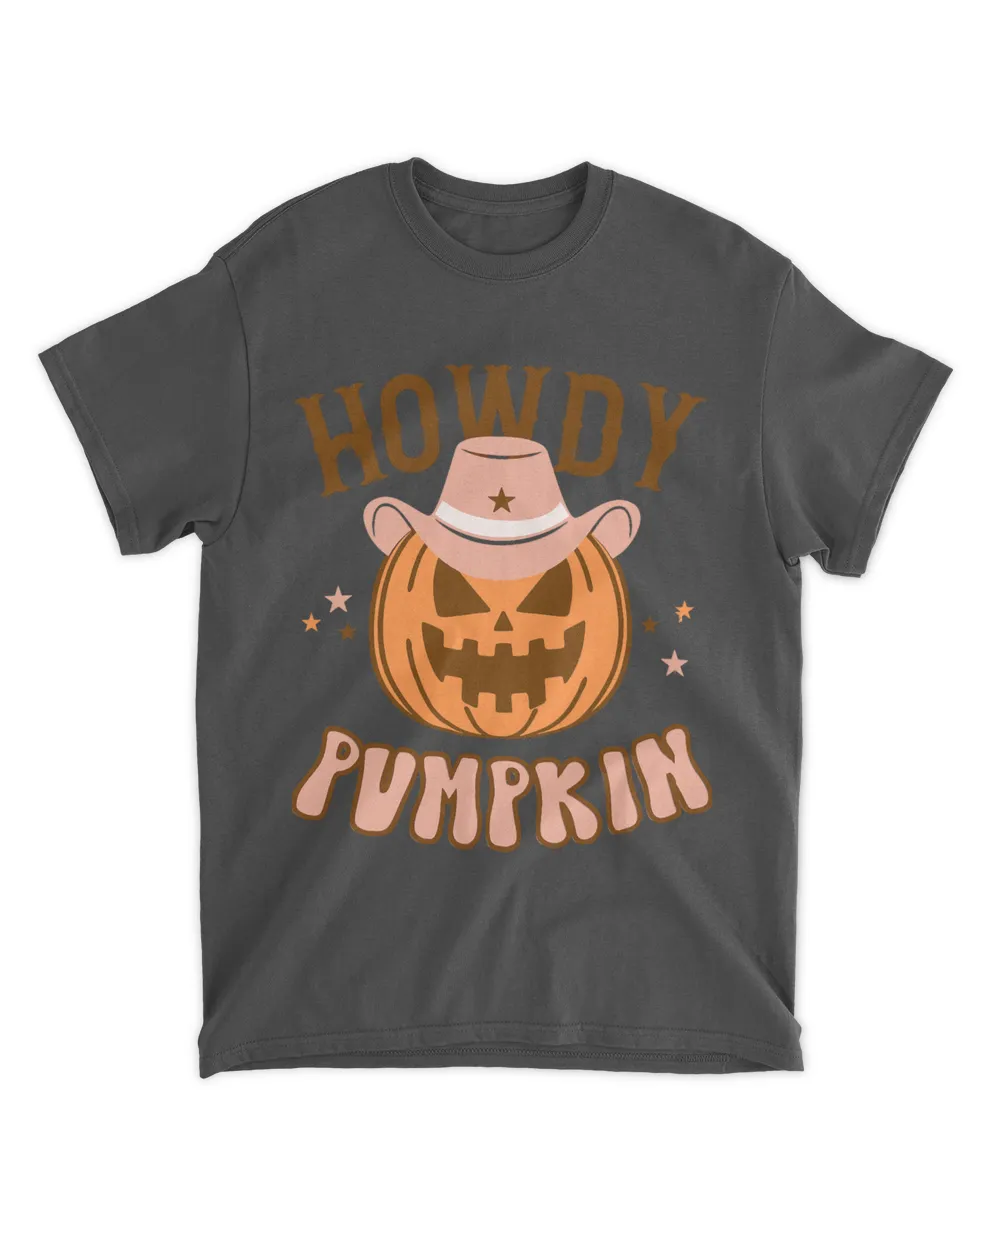 Retro Halloween Cowboy Howdy Pumpkin